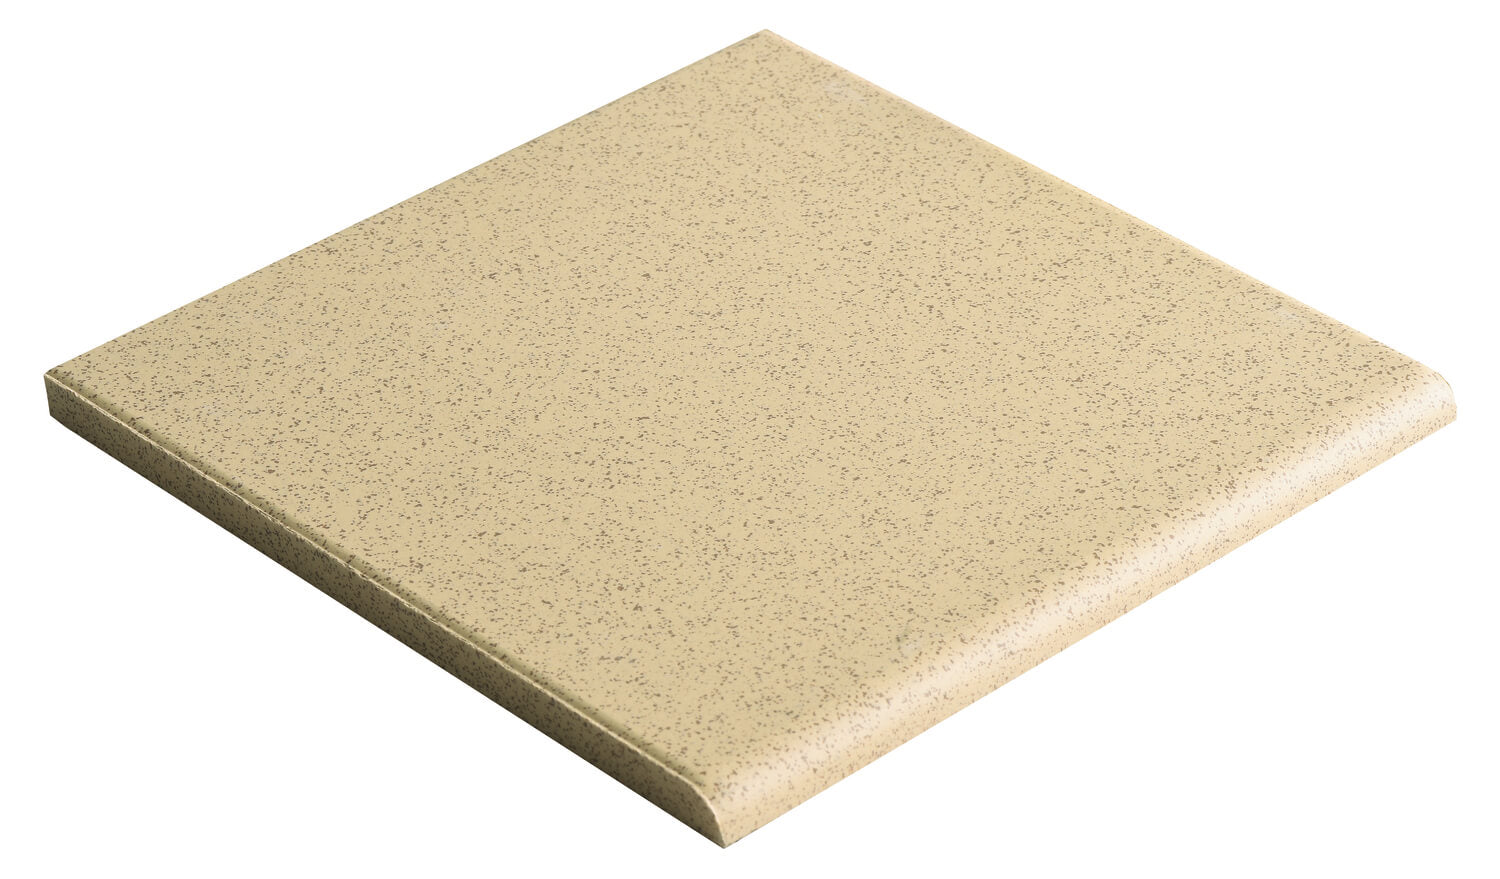 Dorset Woolliscroft Stone Round Edge Slip Resistant Quarry Tile 148x148mm